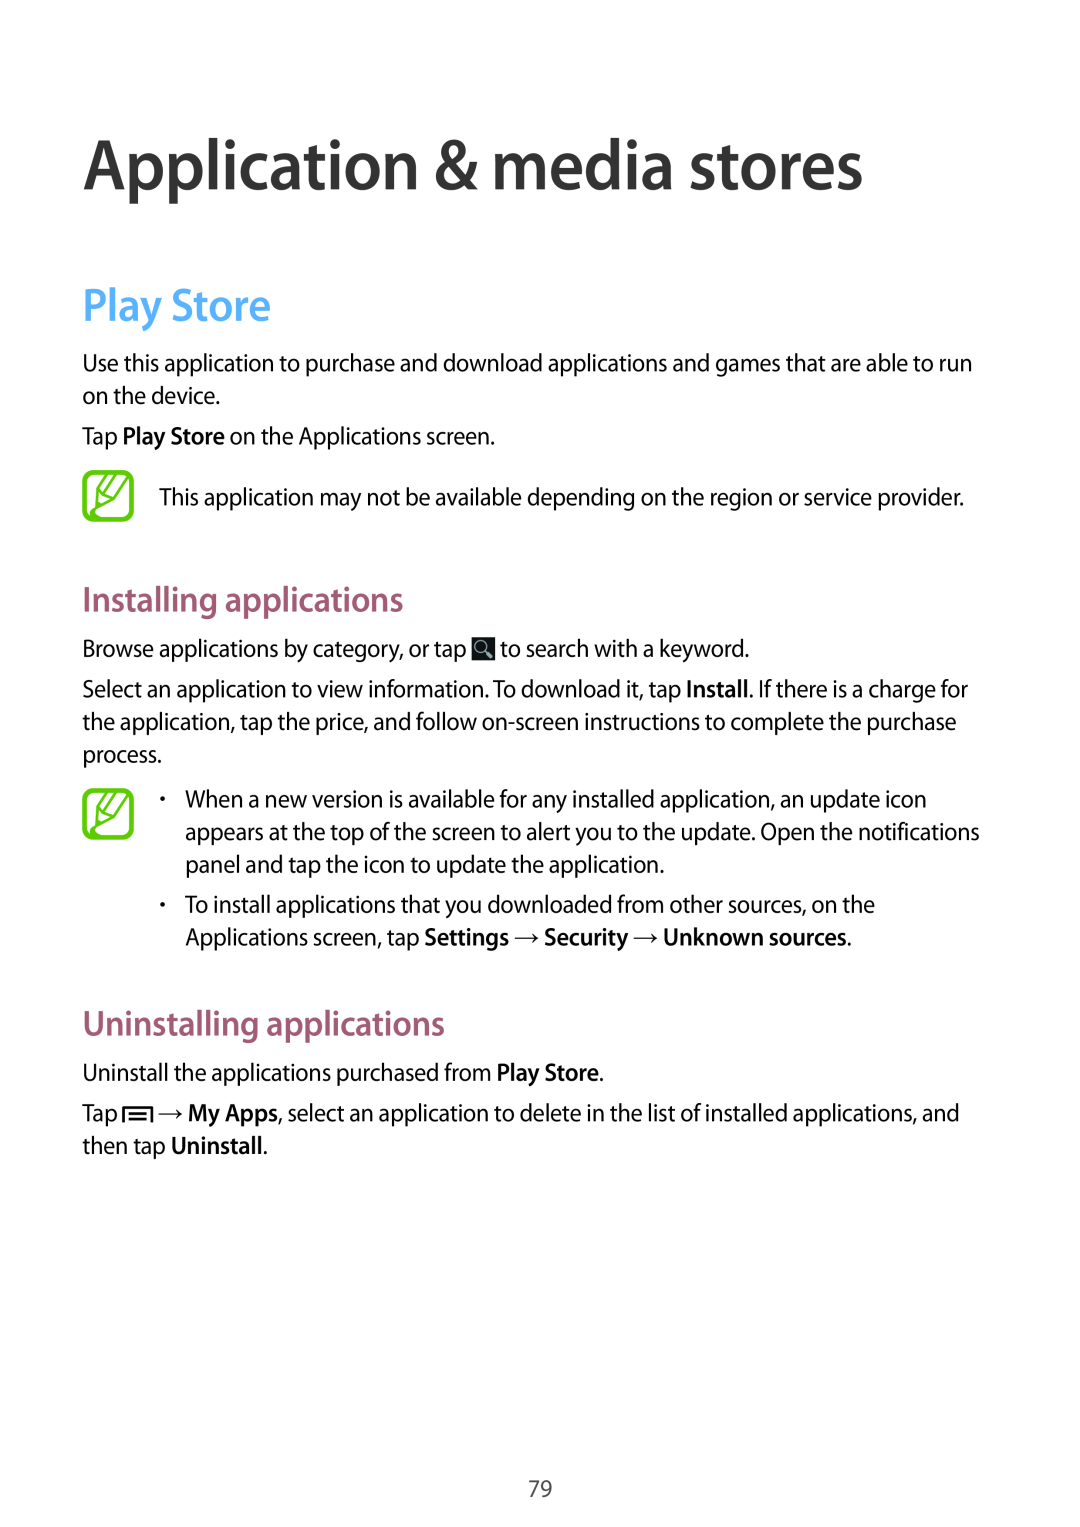 Samsung GT-I8730TAATIM manual Application & media stores, Play Store, Installing applications, Uninstalling applications 